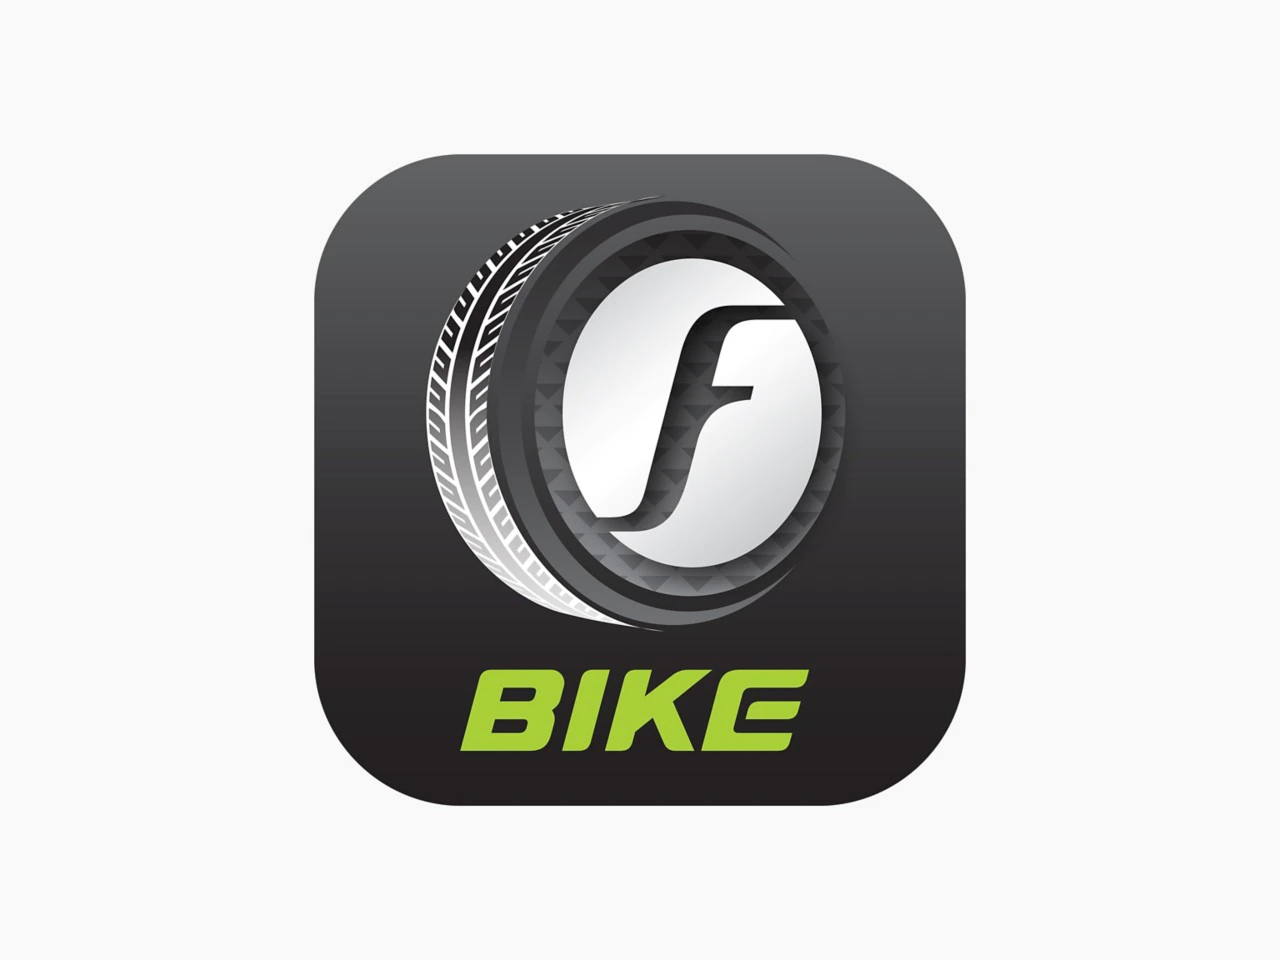 Logo Fobo Bike